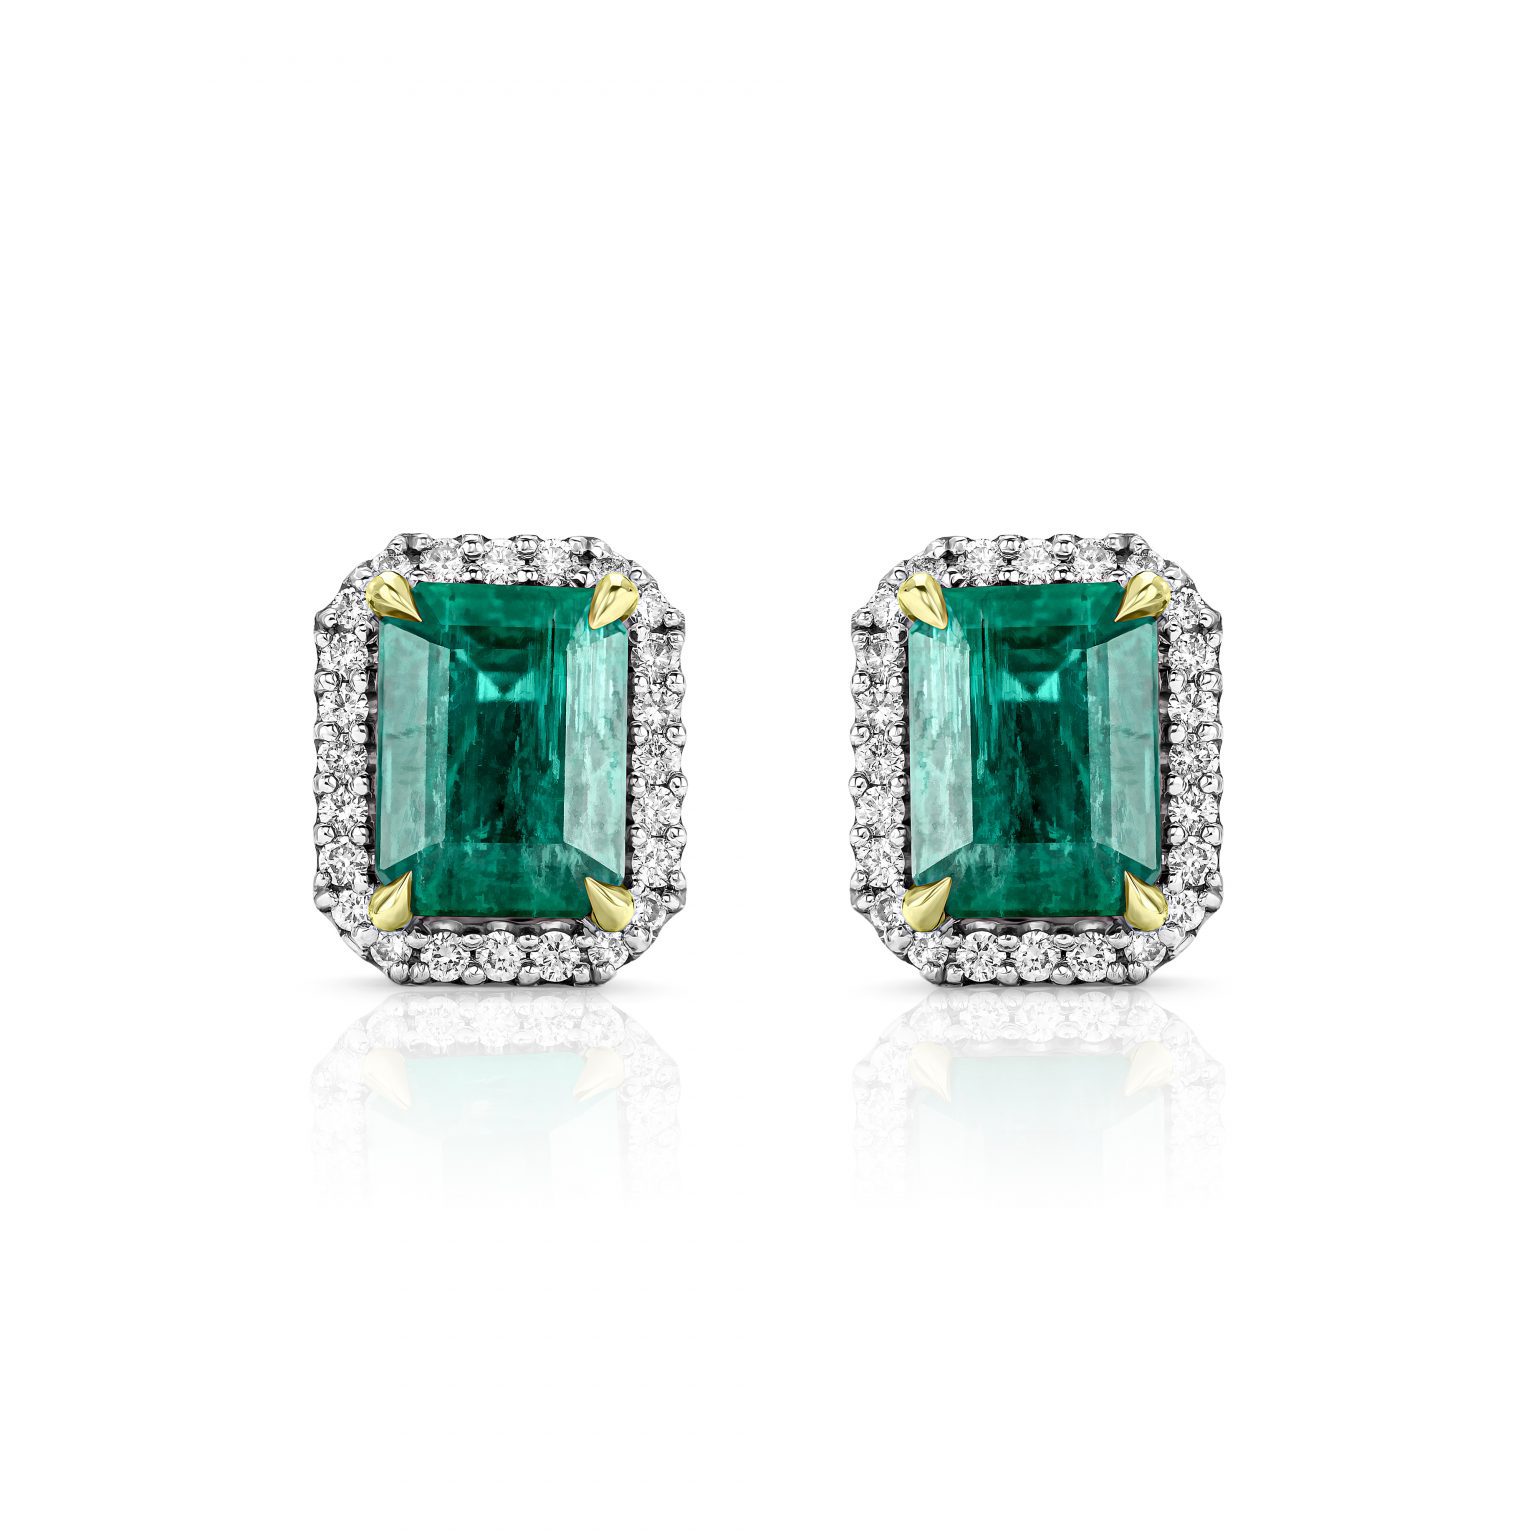 Emerald 1.49 ct stud earrings with diamonds 1.178 ct